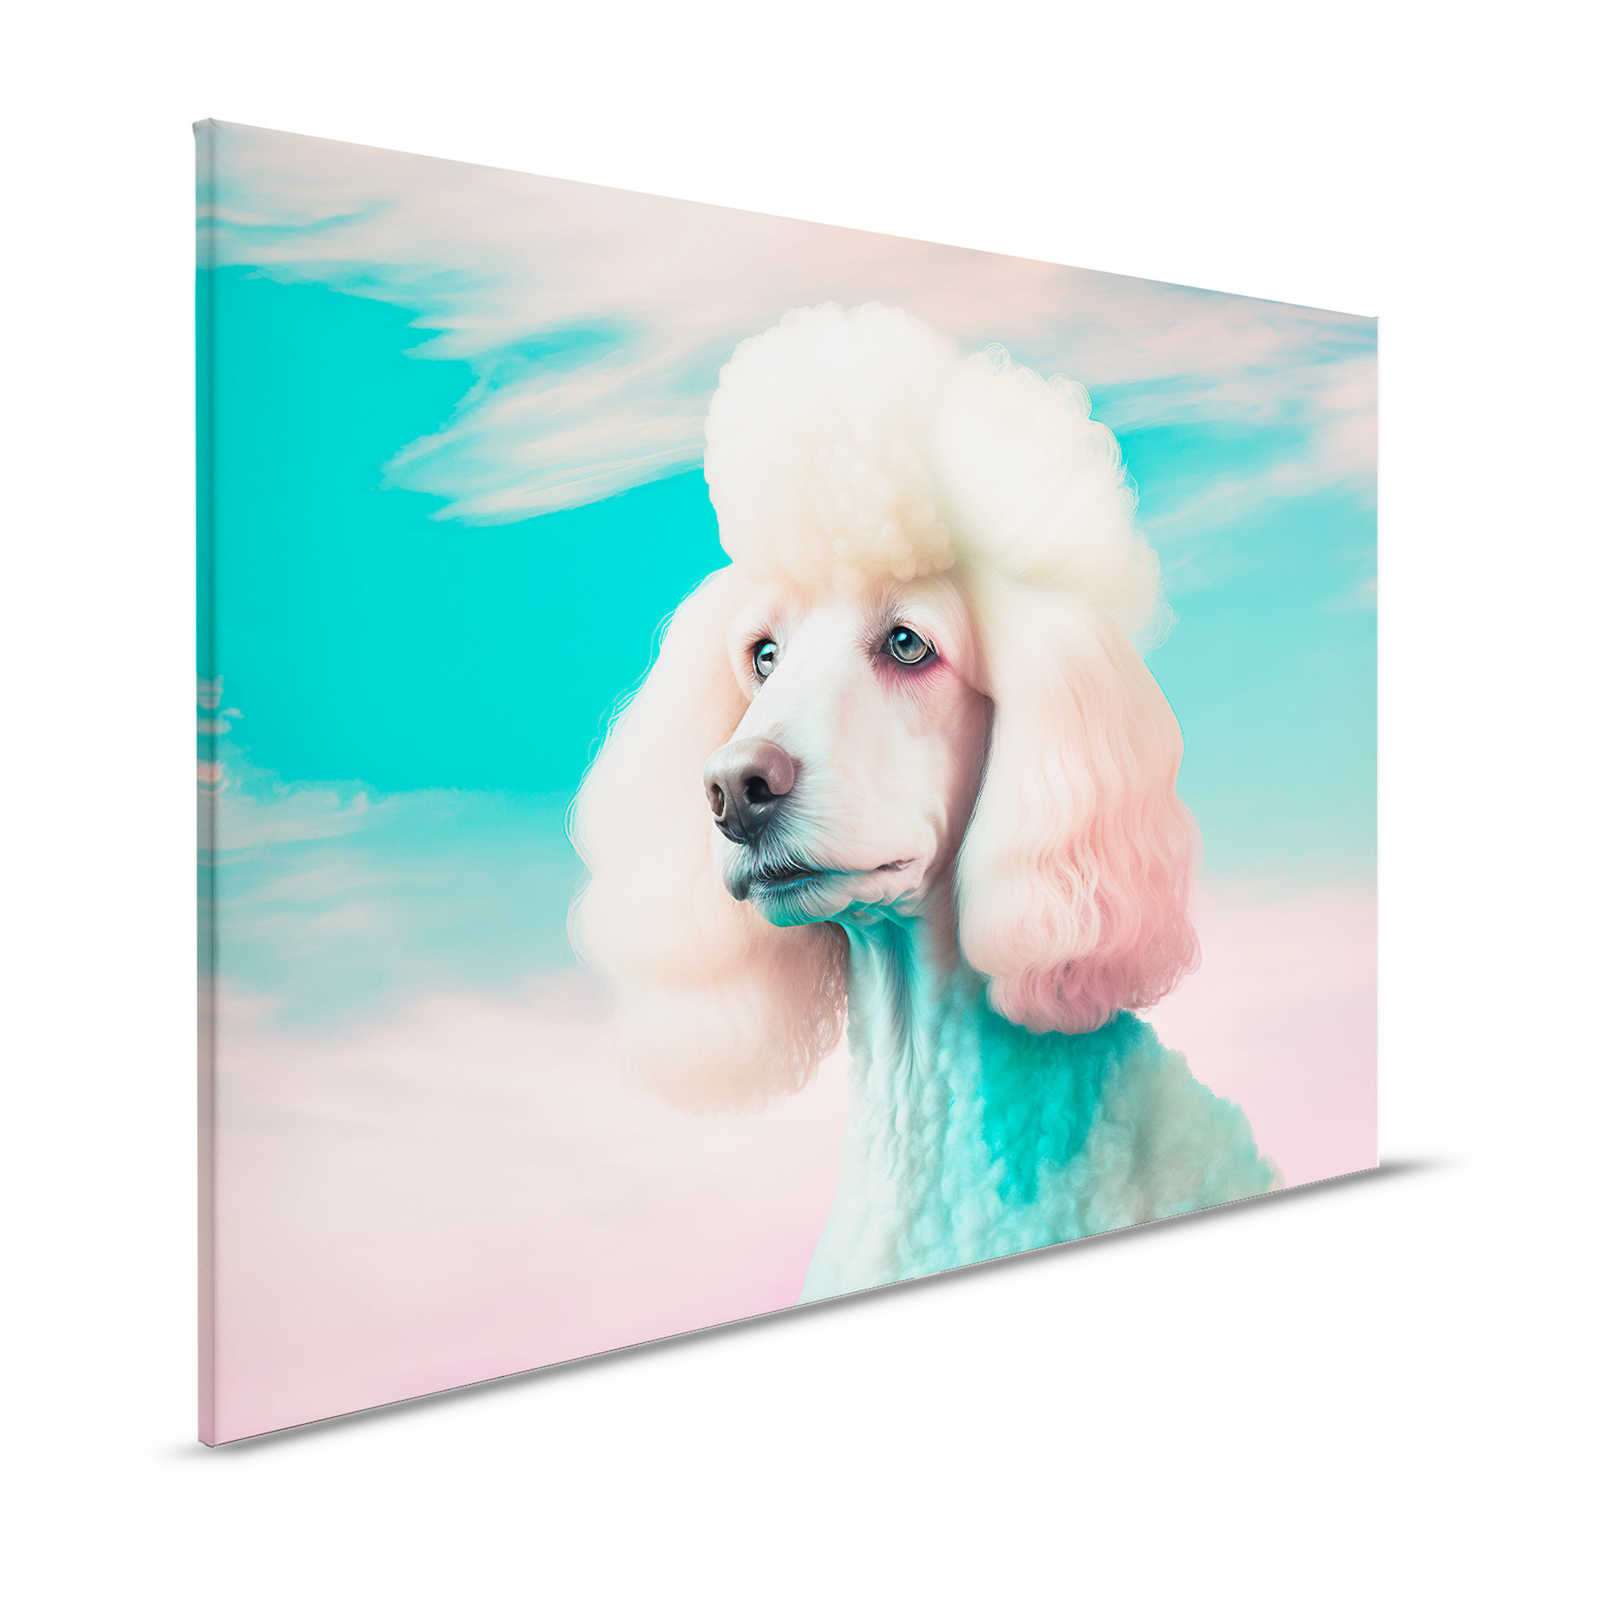 KI Canvas schilderij »rainbow dog« - 120 cm x 80 cm
